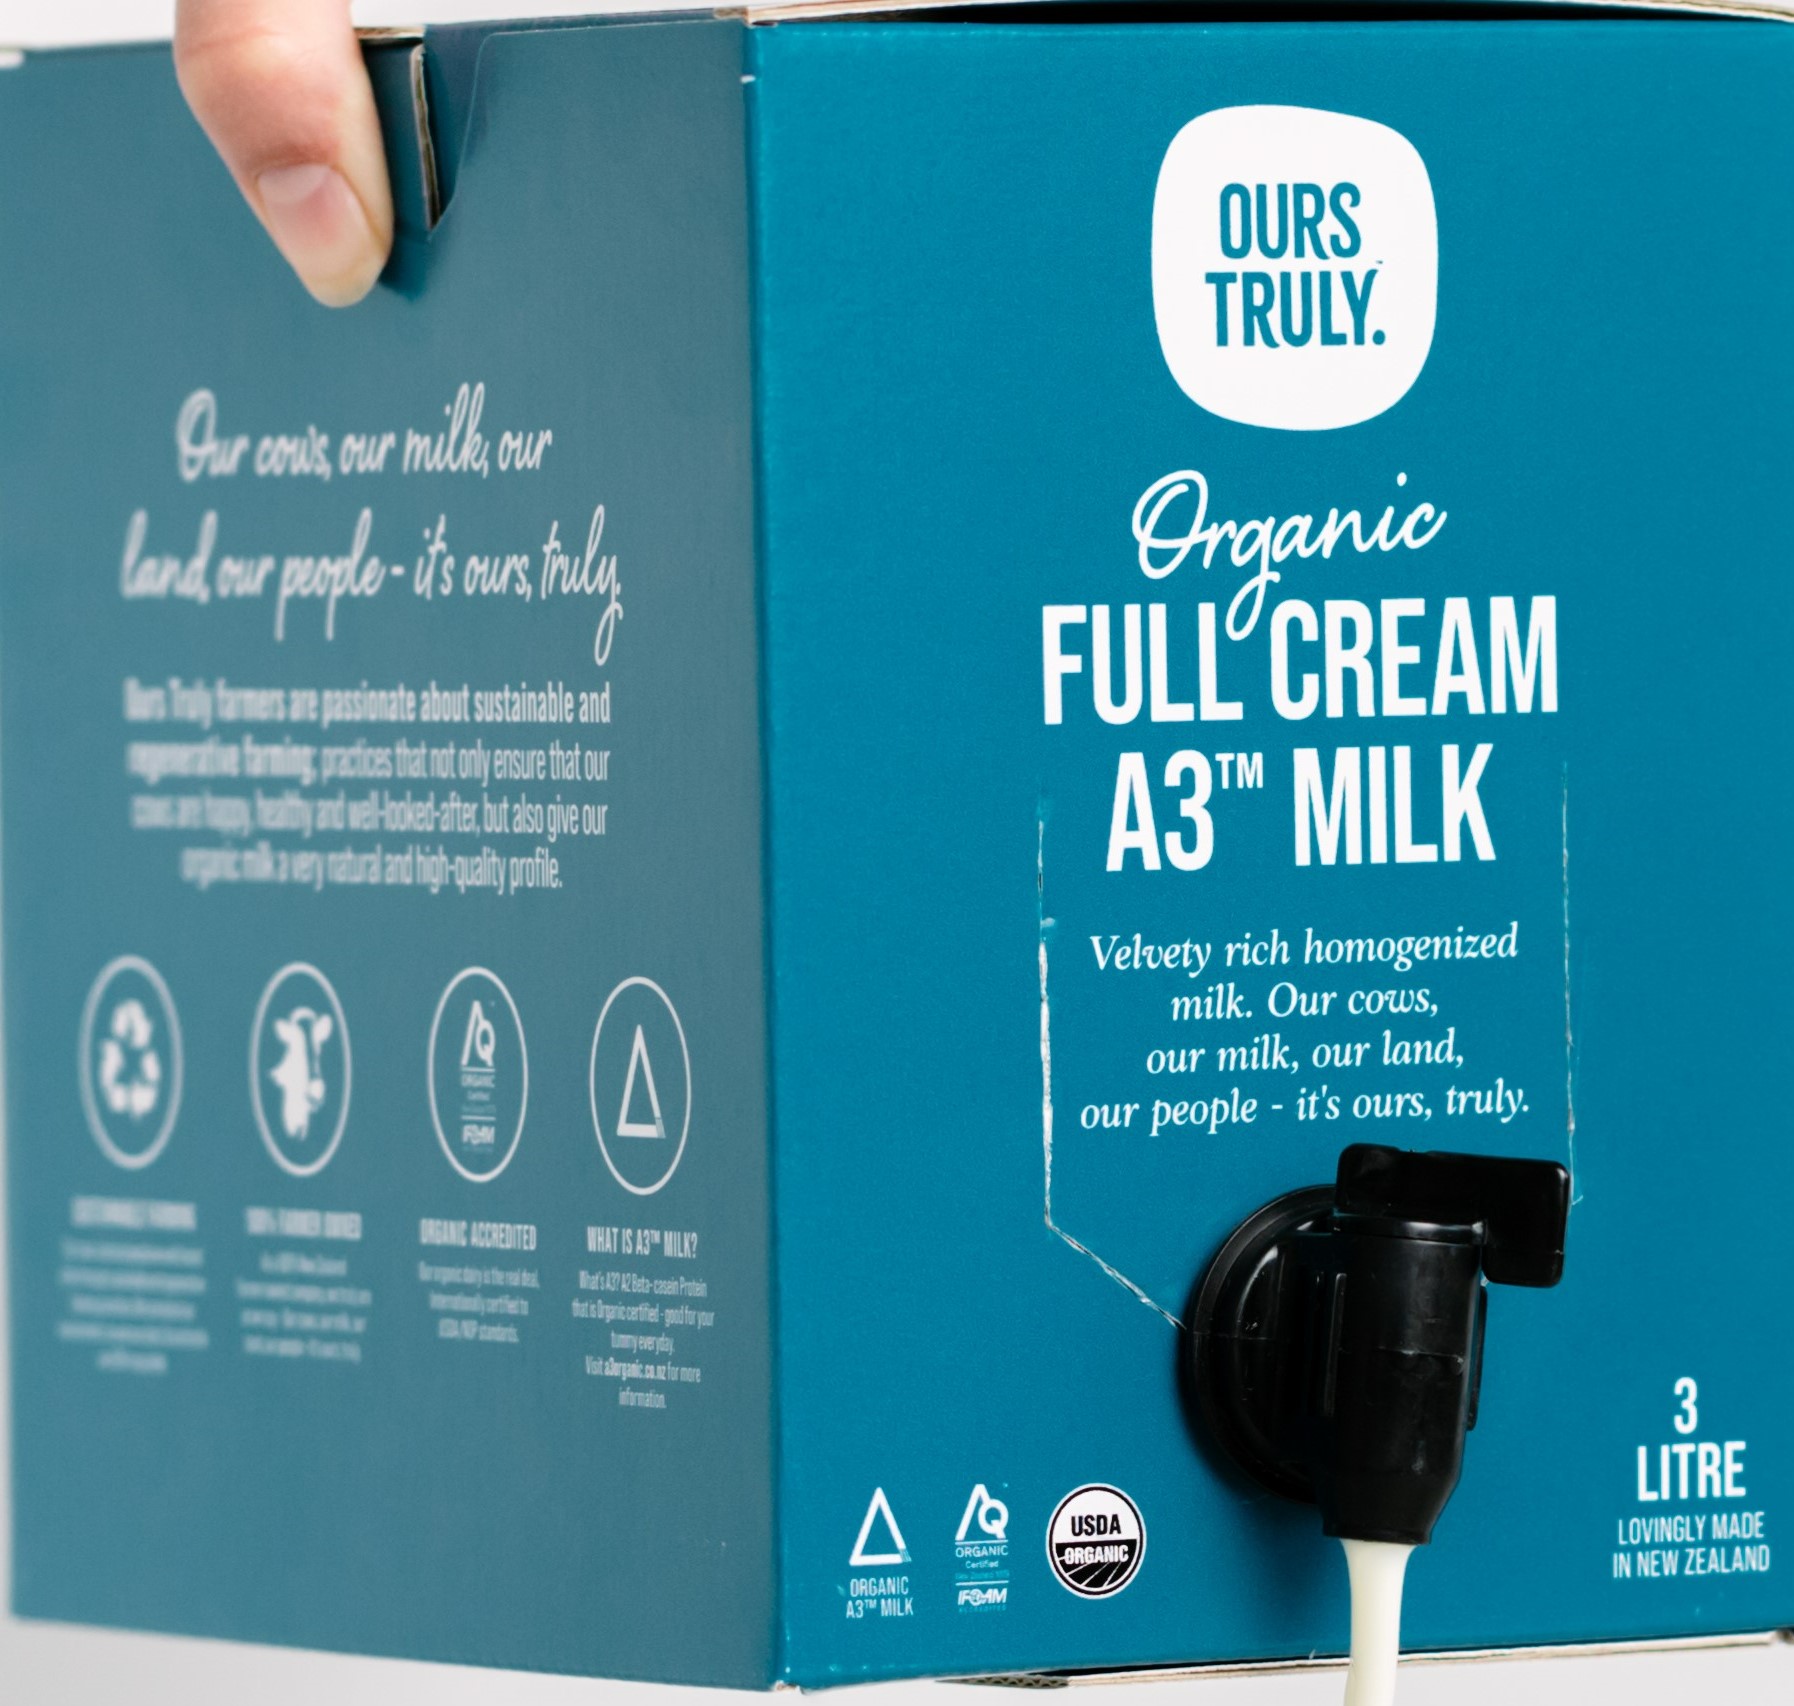 Box of Ours Truly brand Organic Full Cream A3™ Milk (3L)